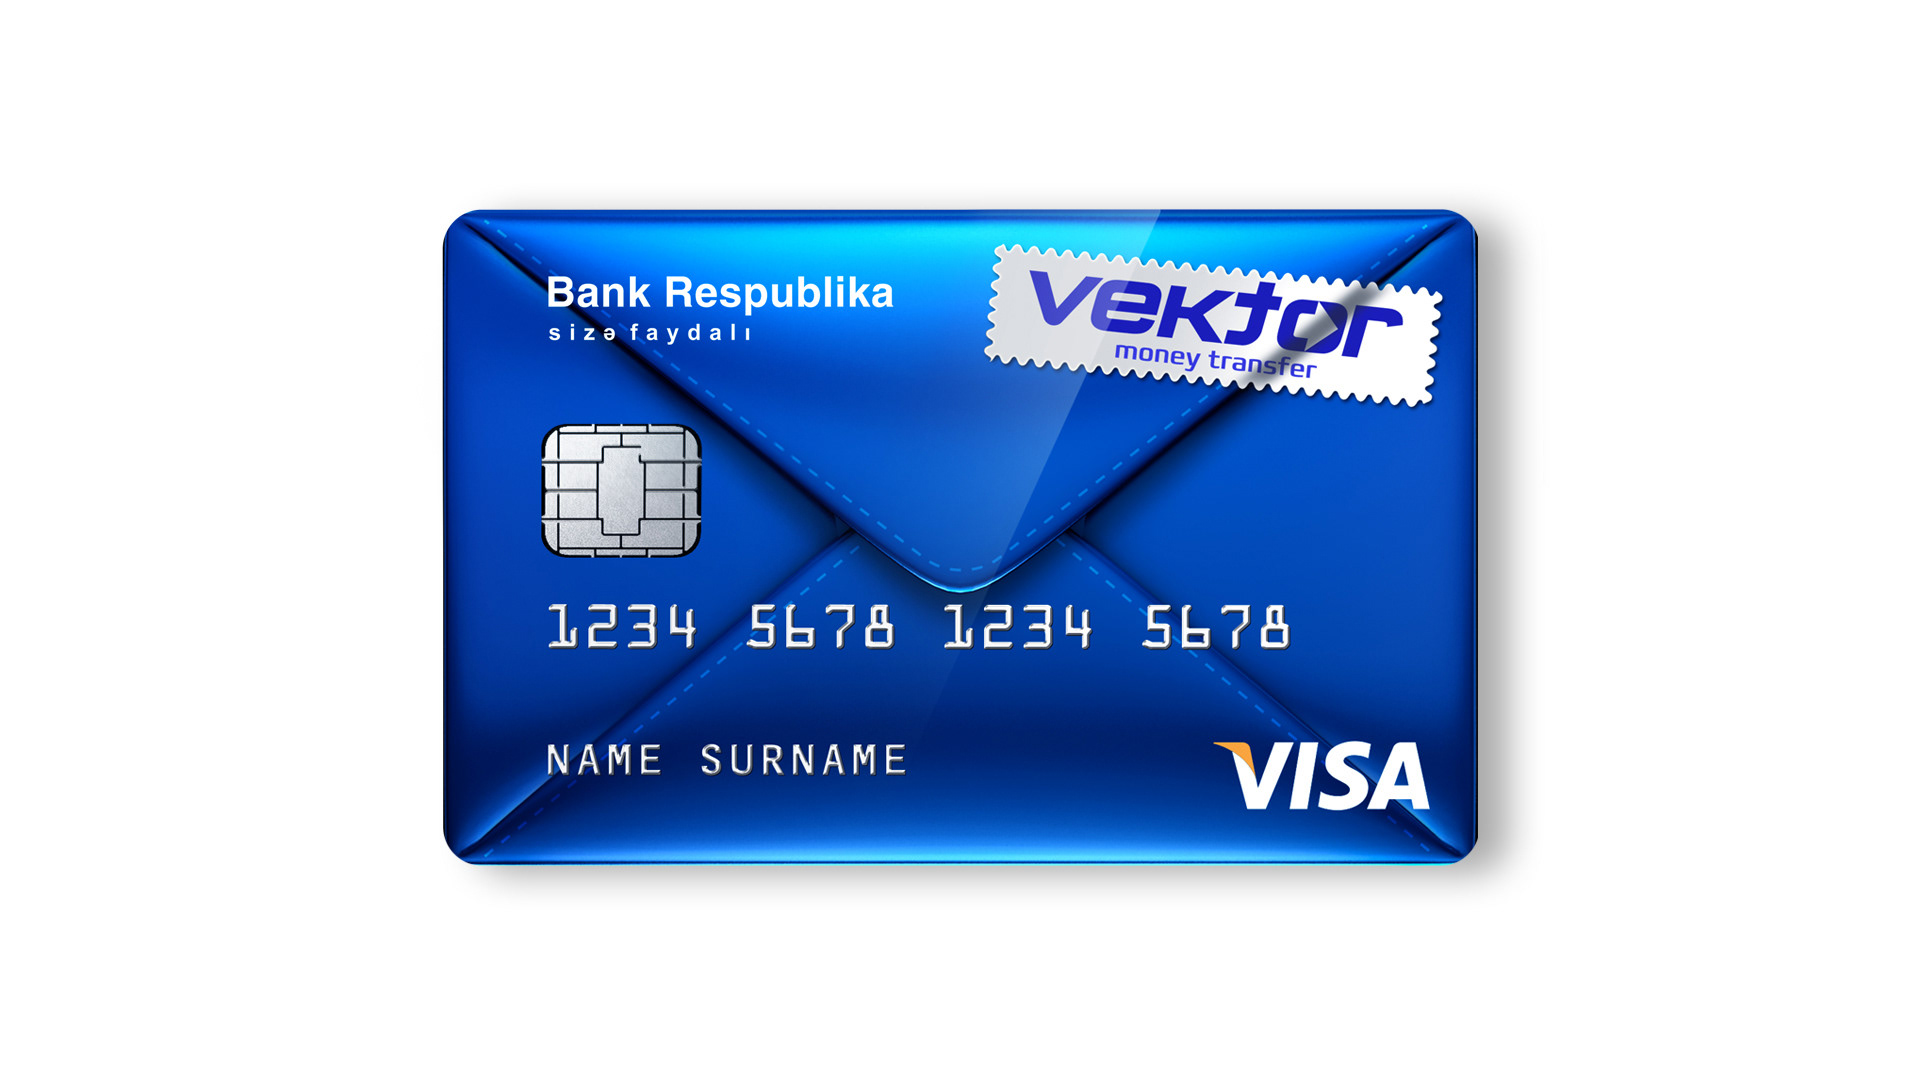 Bank money transfer. Visa money transfer карта. Карта Bank Respublika. Card transfer. Карта банка transfer.